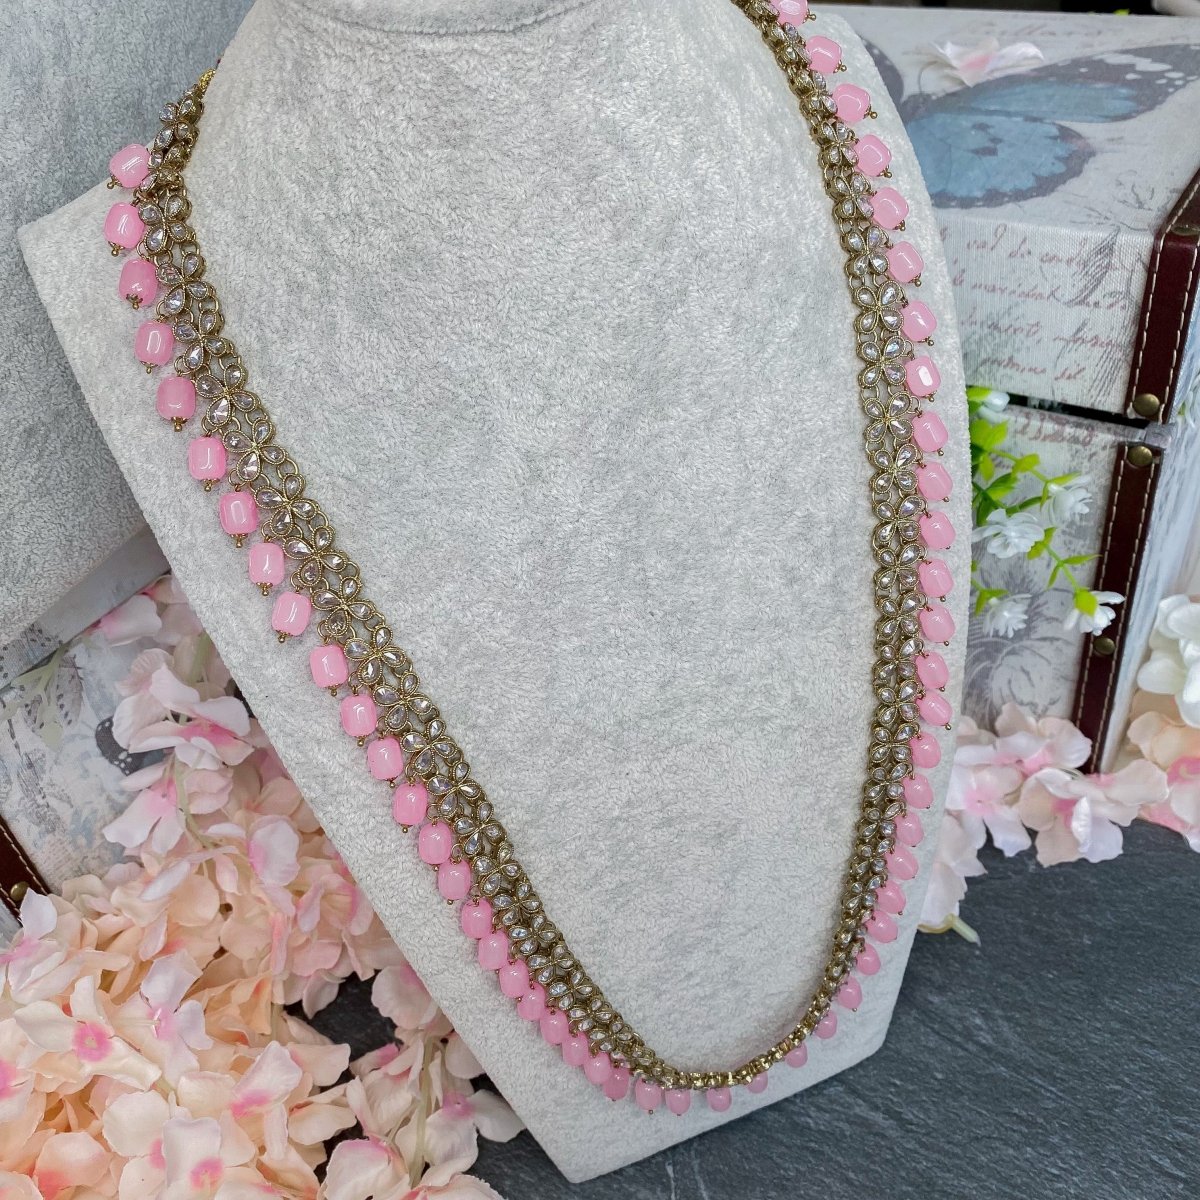 Laxmi goddess Pink necklace Pink beaded pendant necklace at ₹2550 | Azilaa